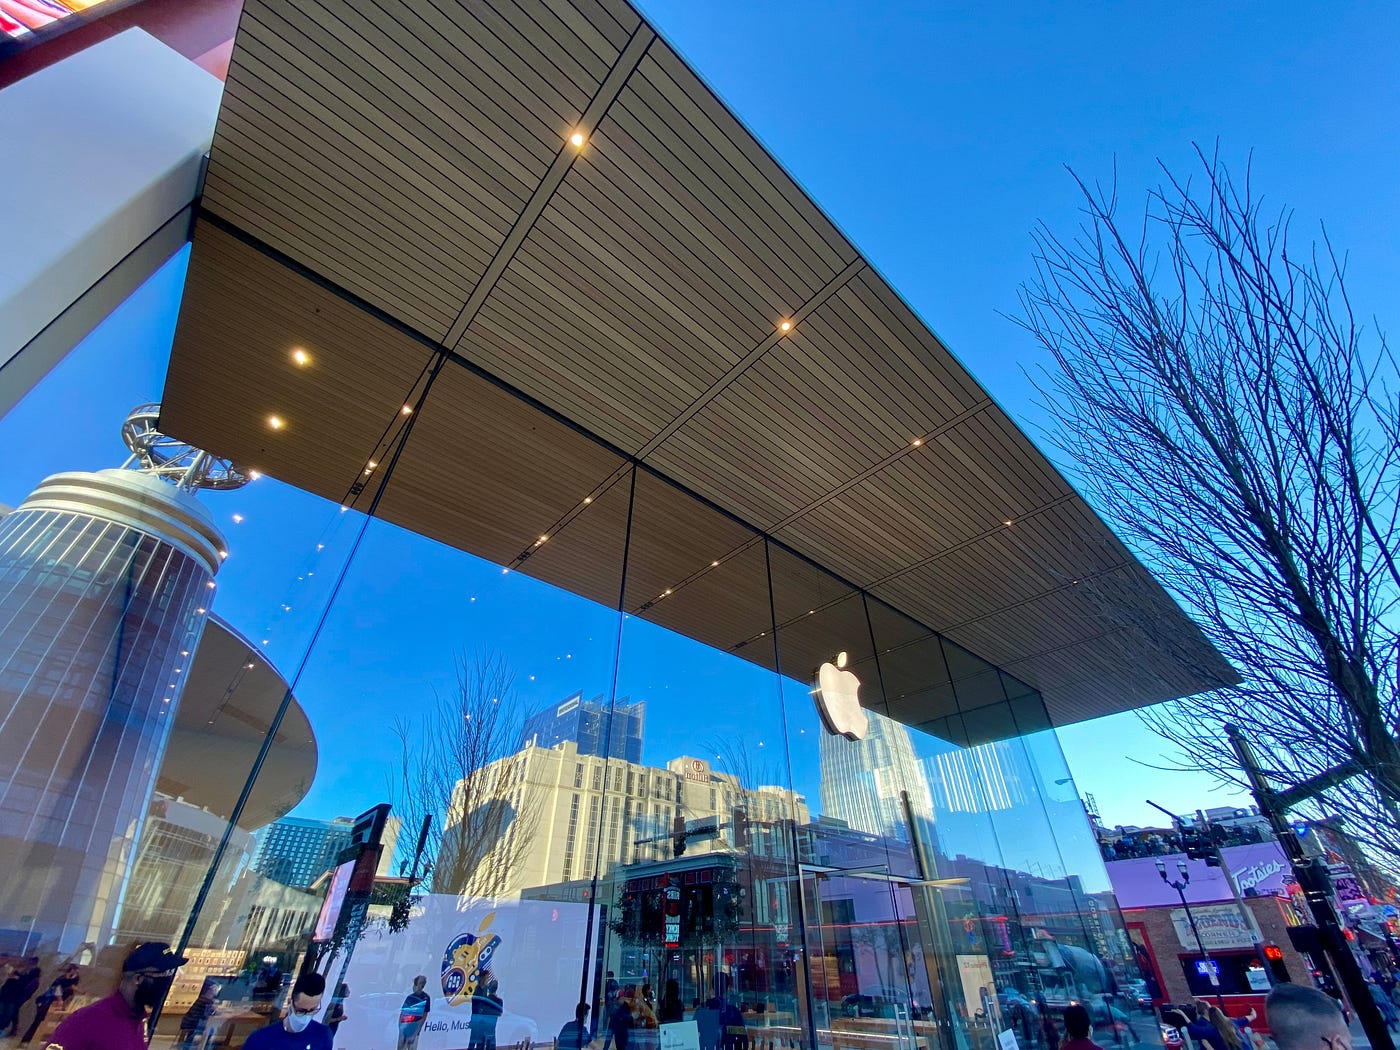 CoolSprings Galleria - Apple Store - Apple